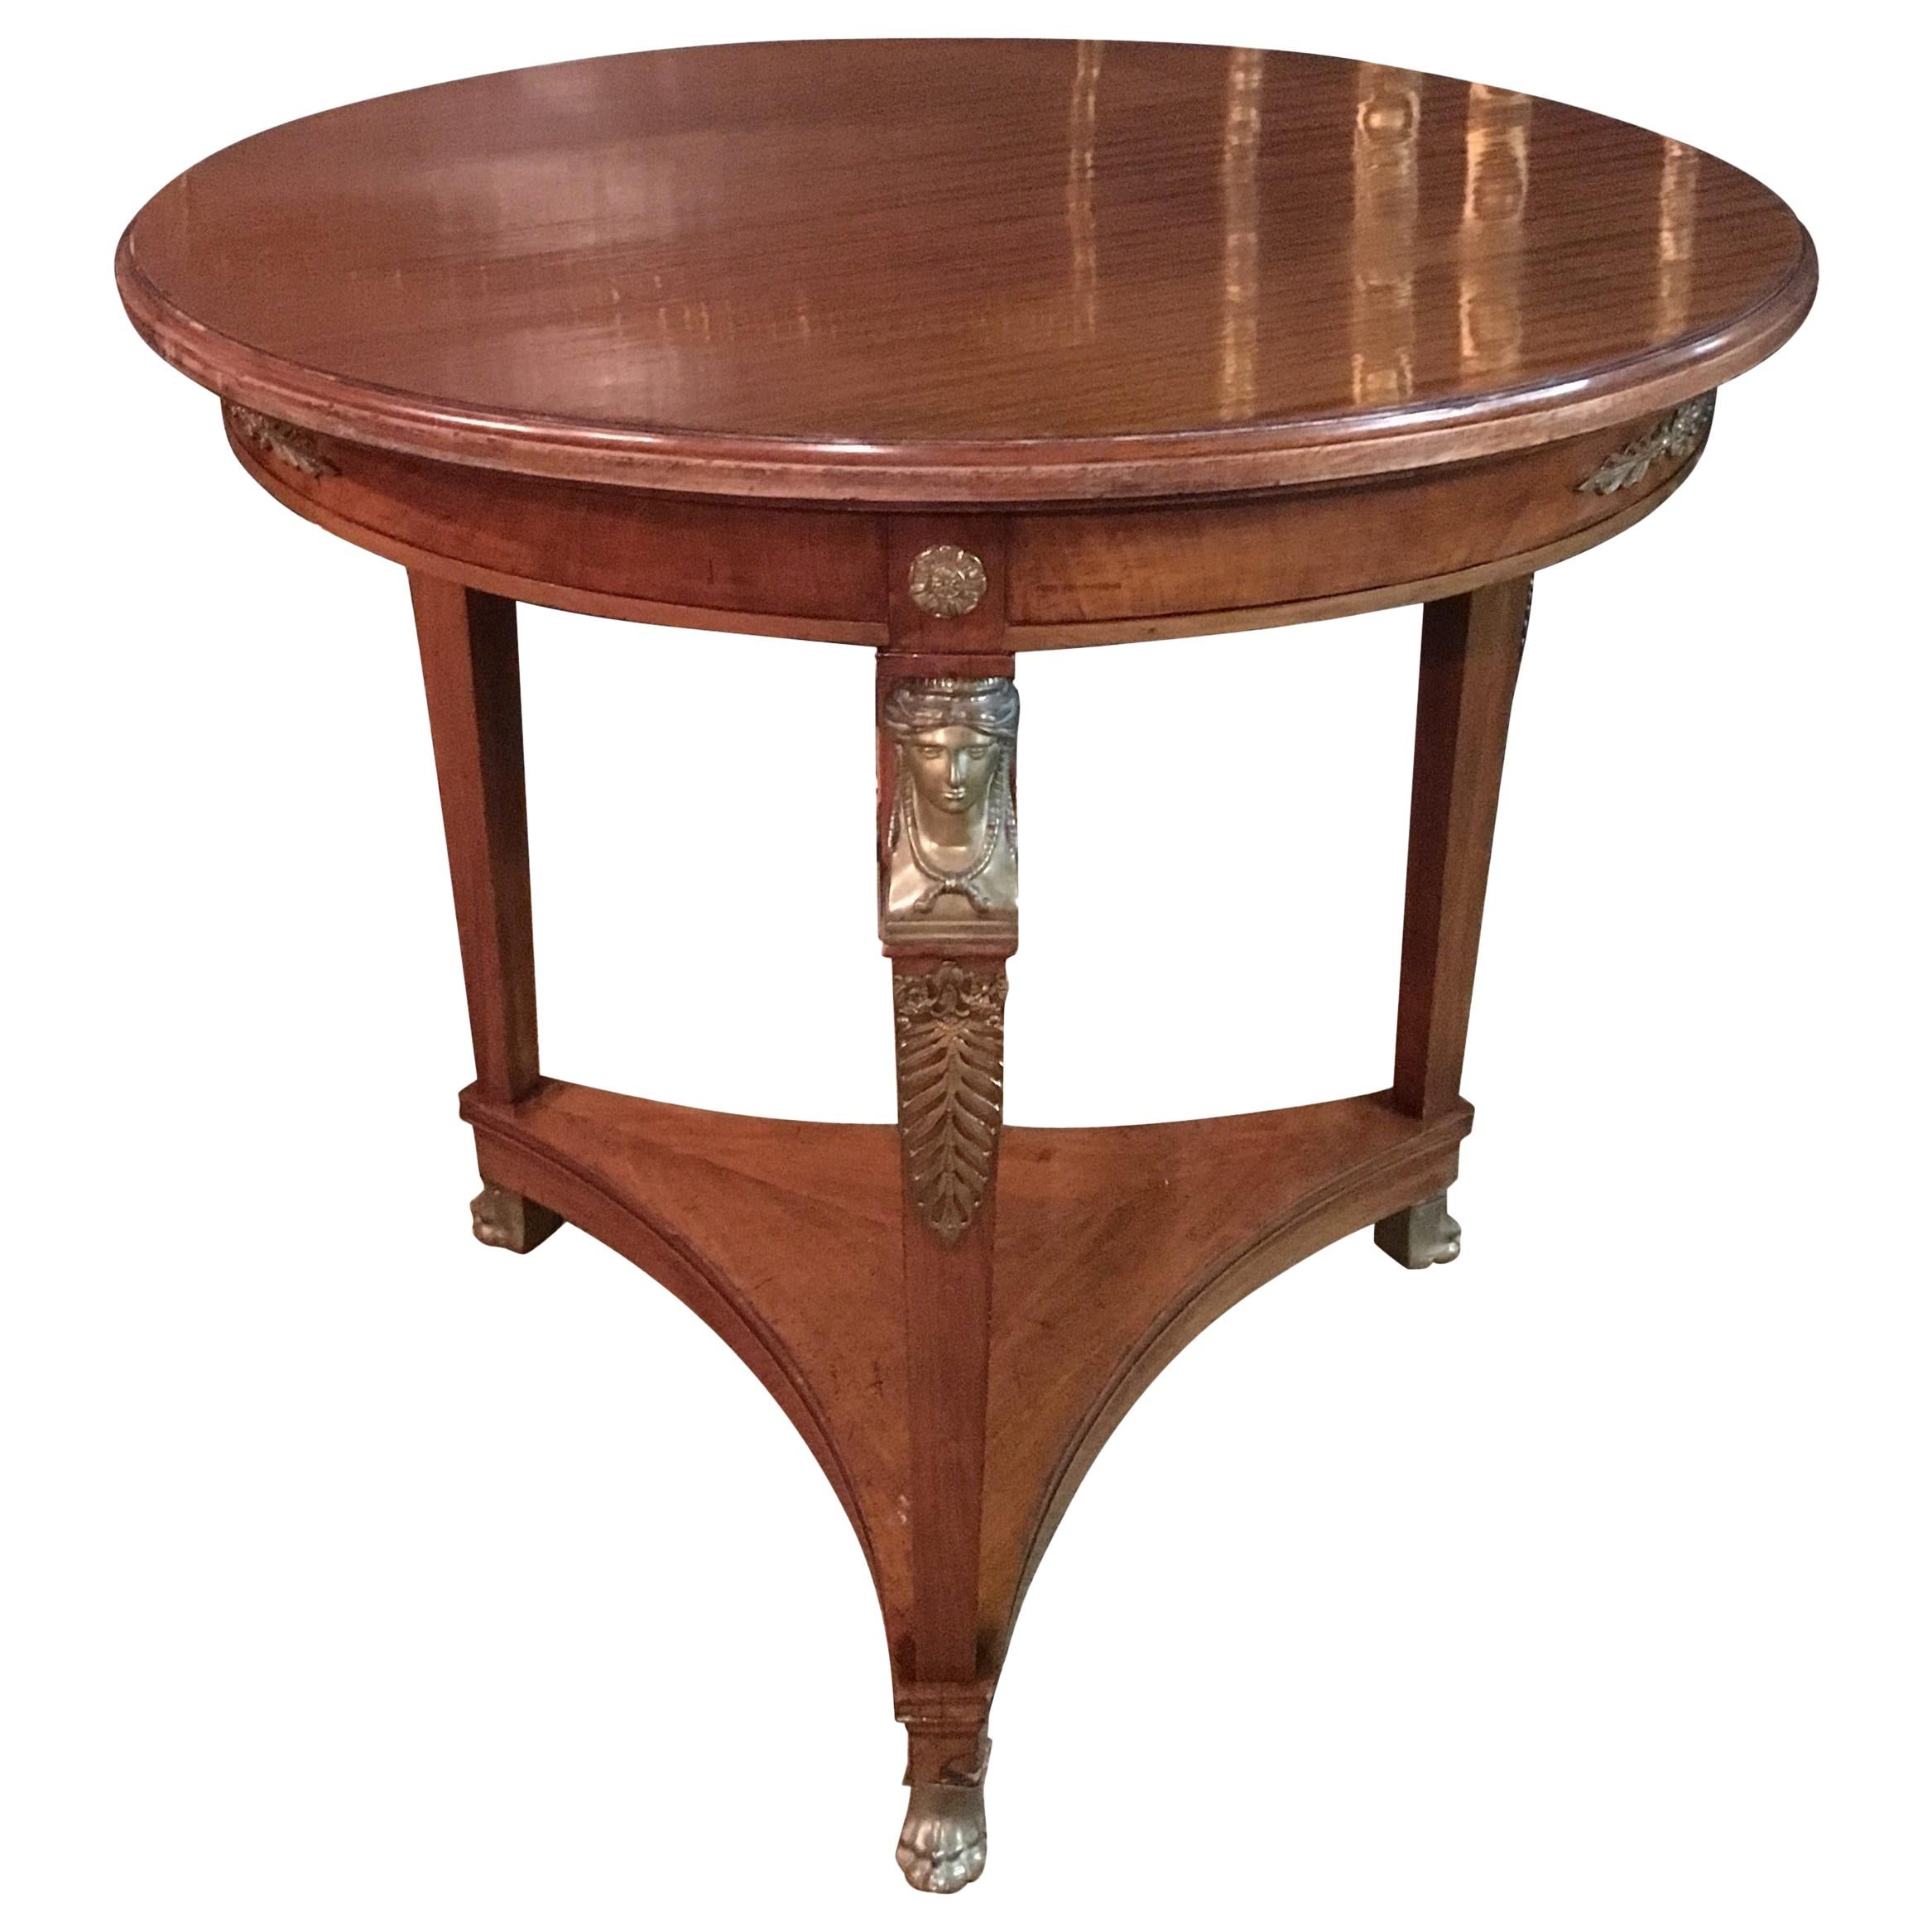 Original antique Empire Table circa 1860 - 1880 Mahogany veneer bronzed  For Sale